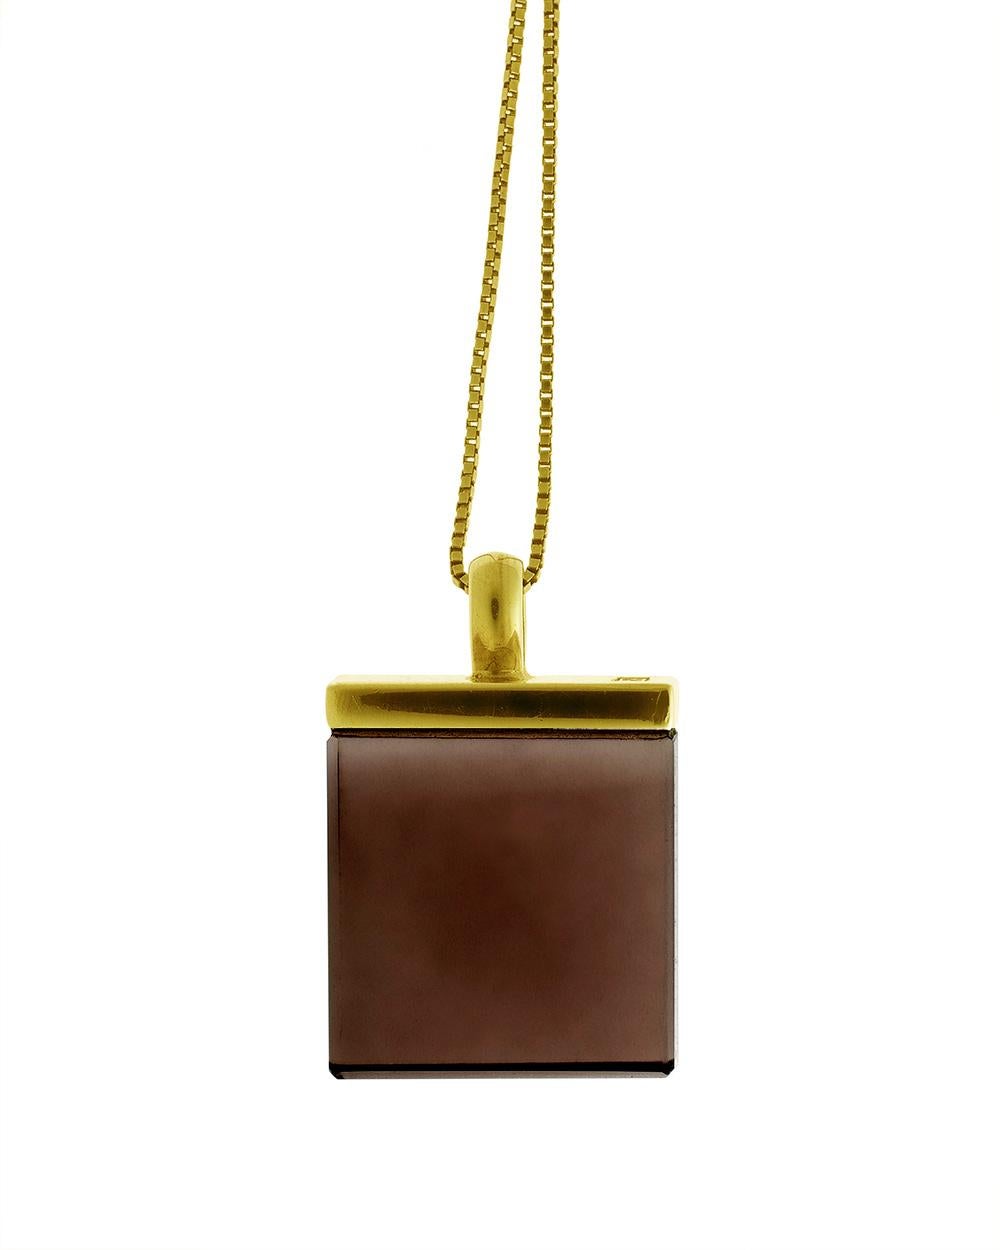 Eighteen Karat Yellow Gold Art Deco Style Pendant Necklace with Smoky Quartz For Sale 3